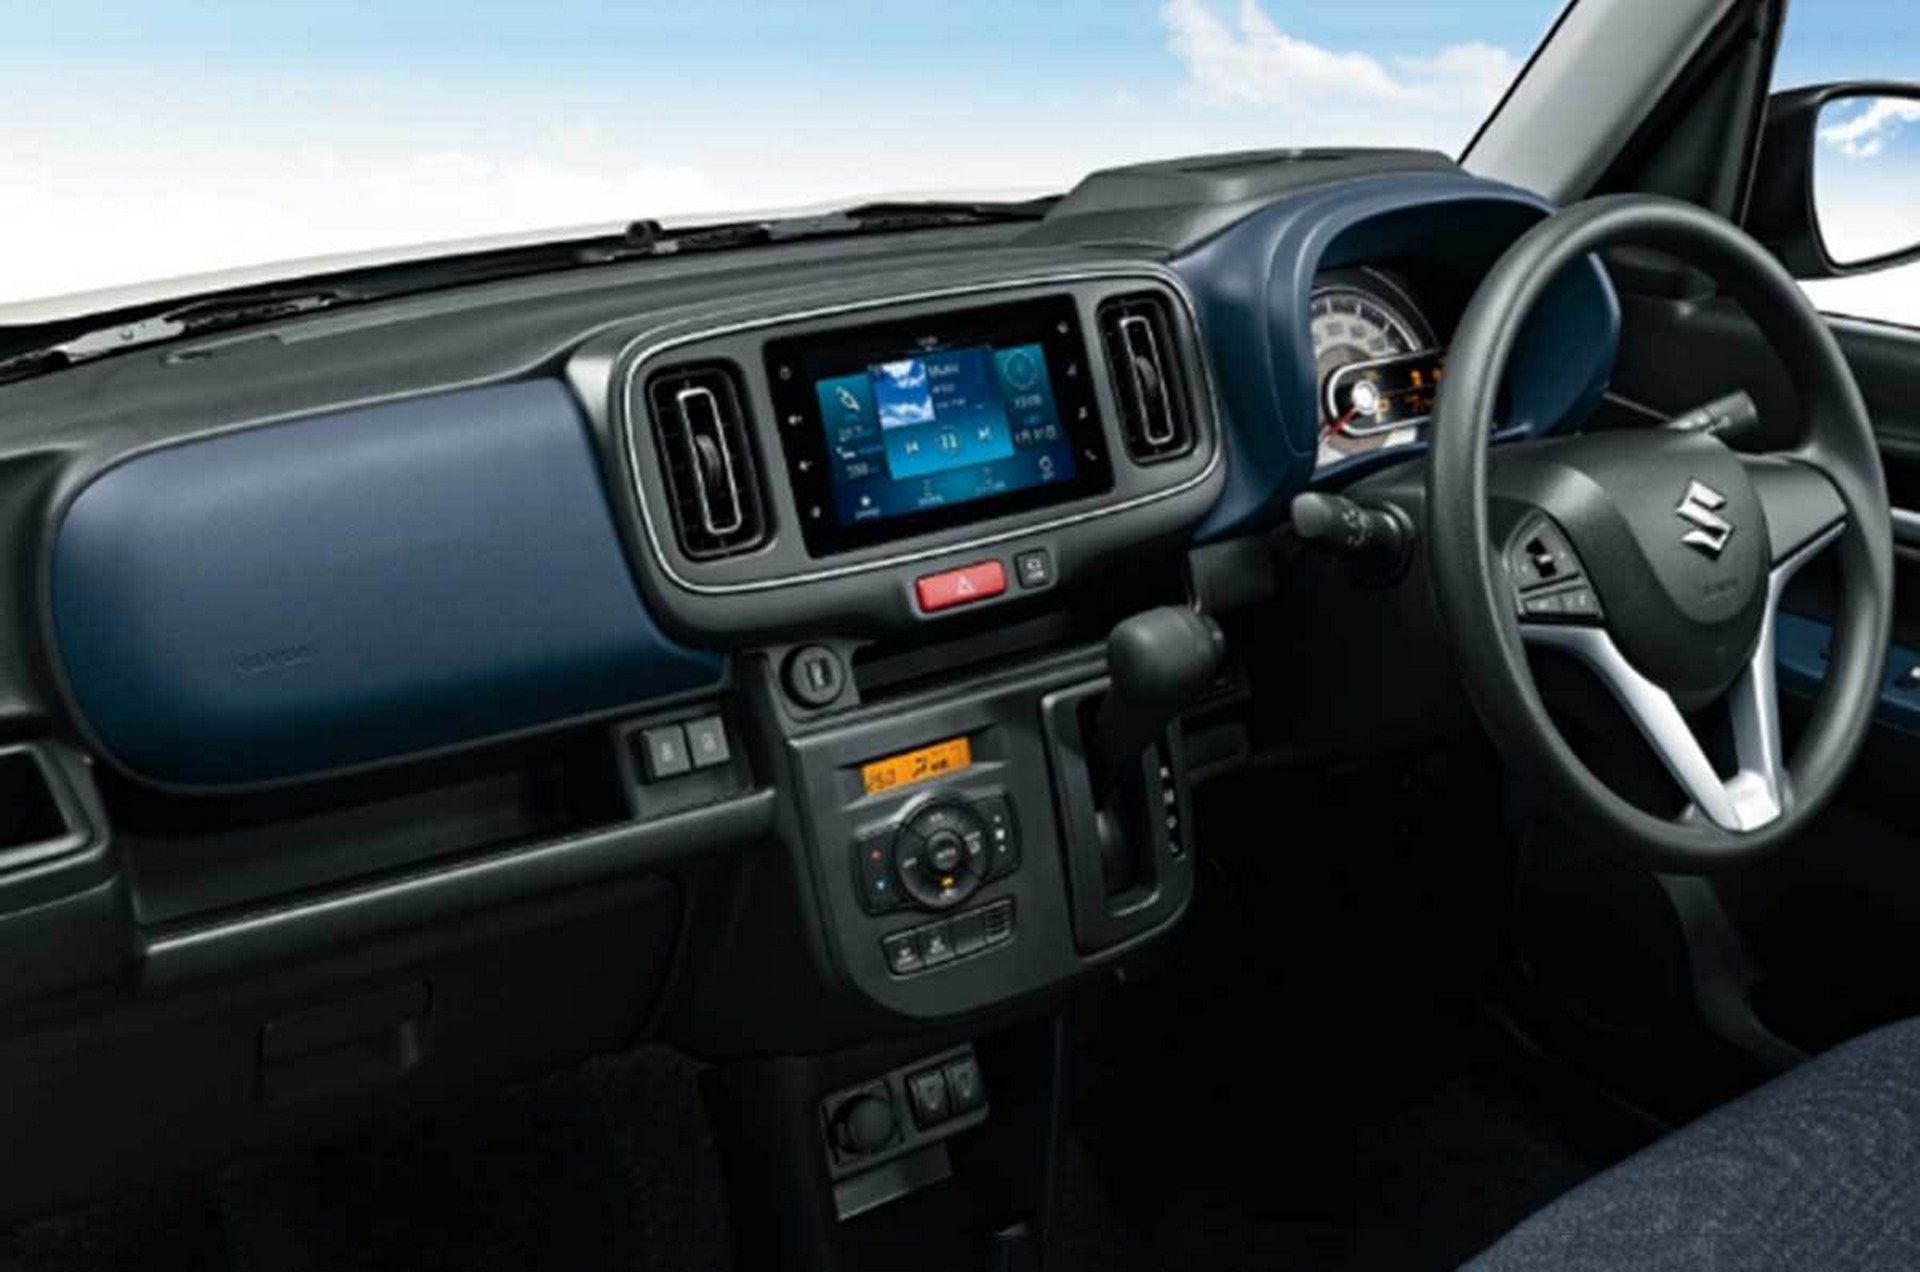 Suzuki Alto interior - Cockpit